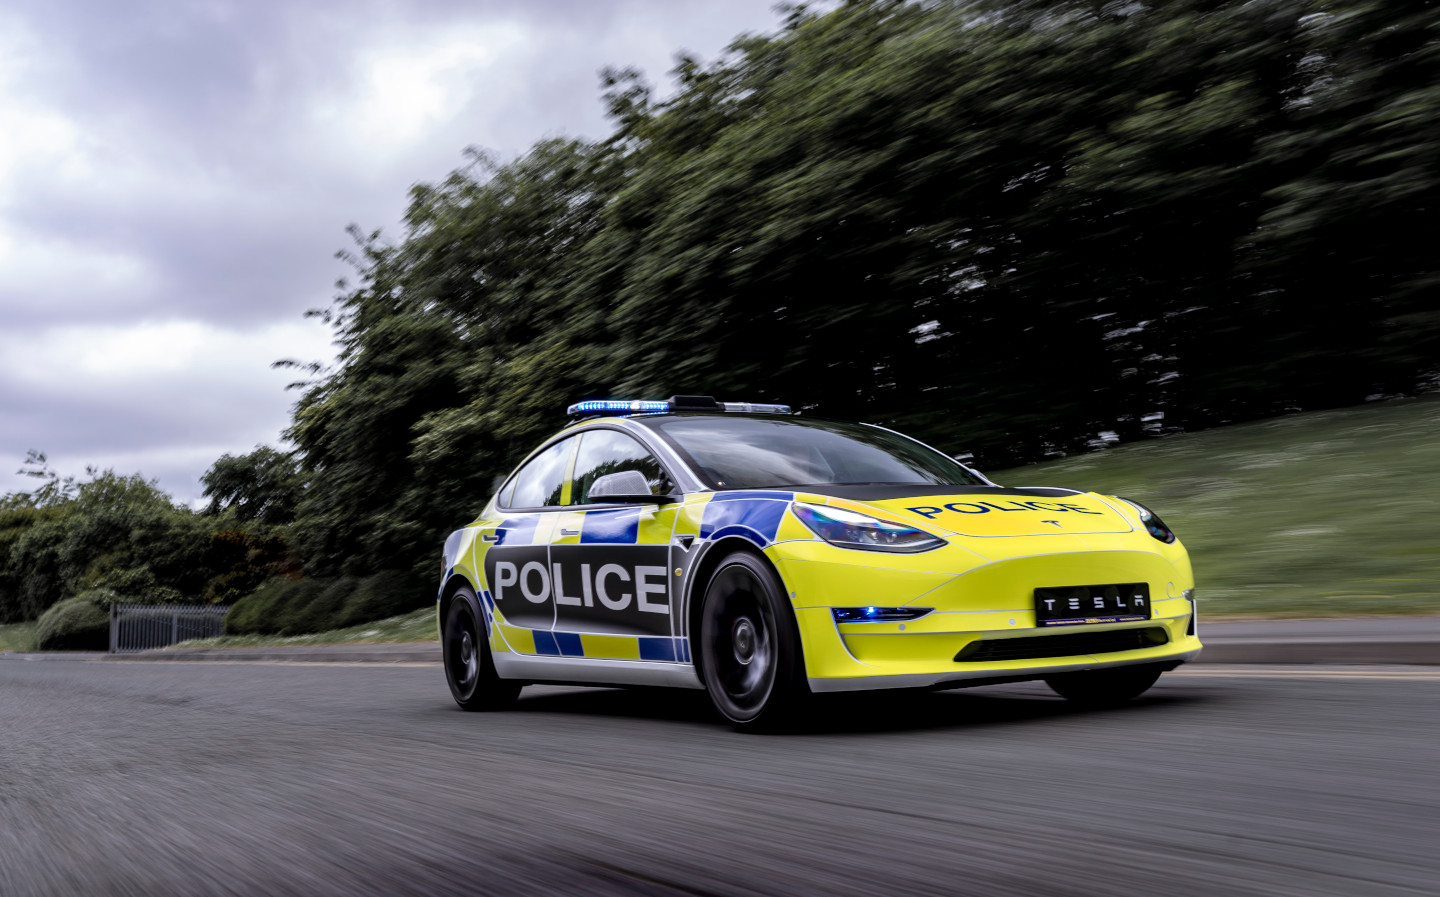 Tesla creates Model 3 emergency response car for police trials